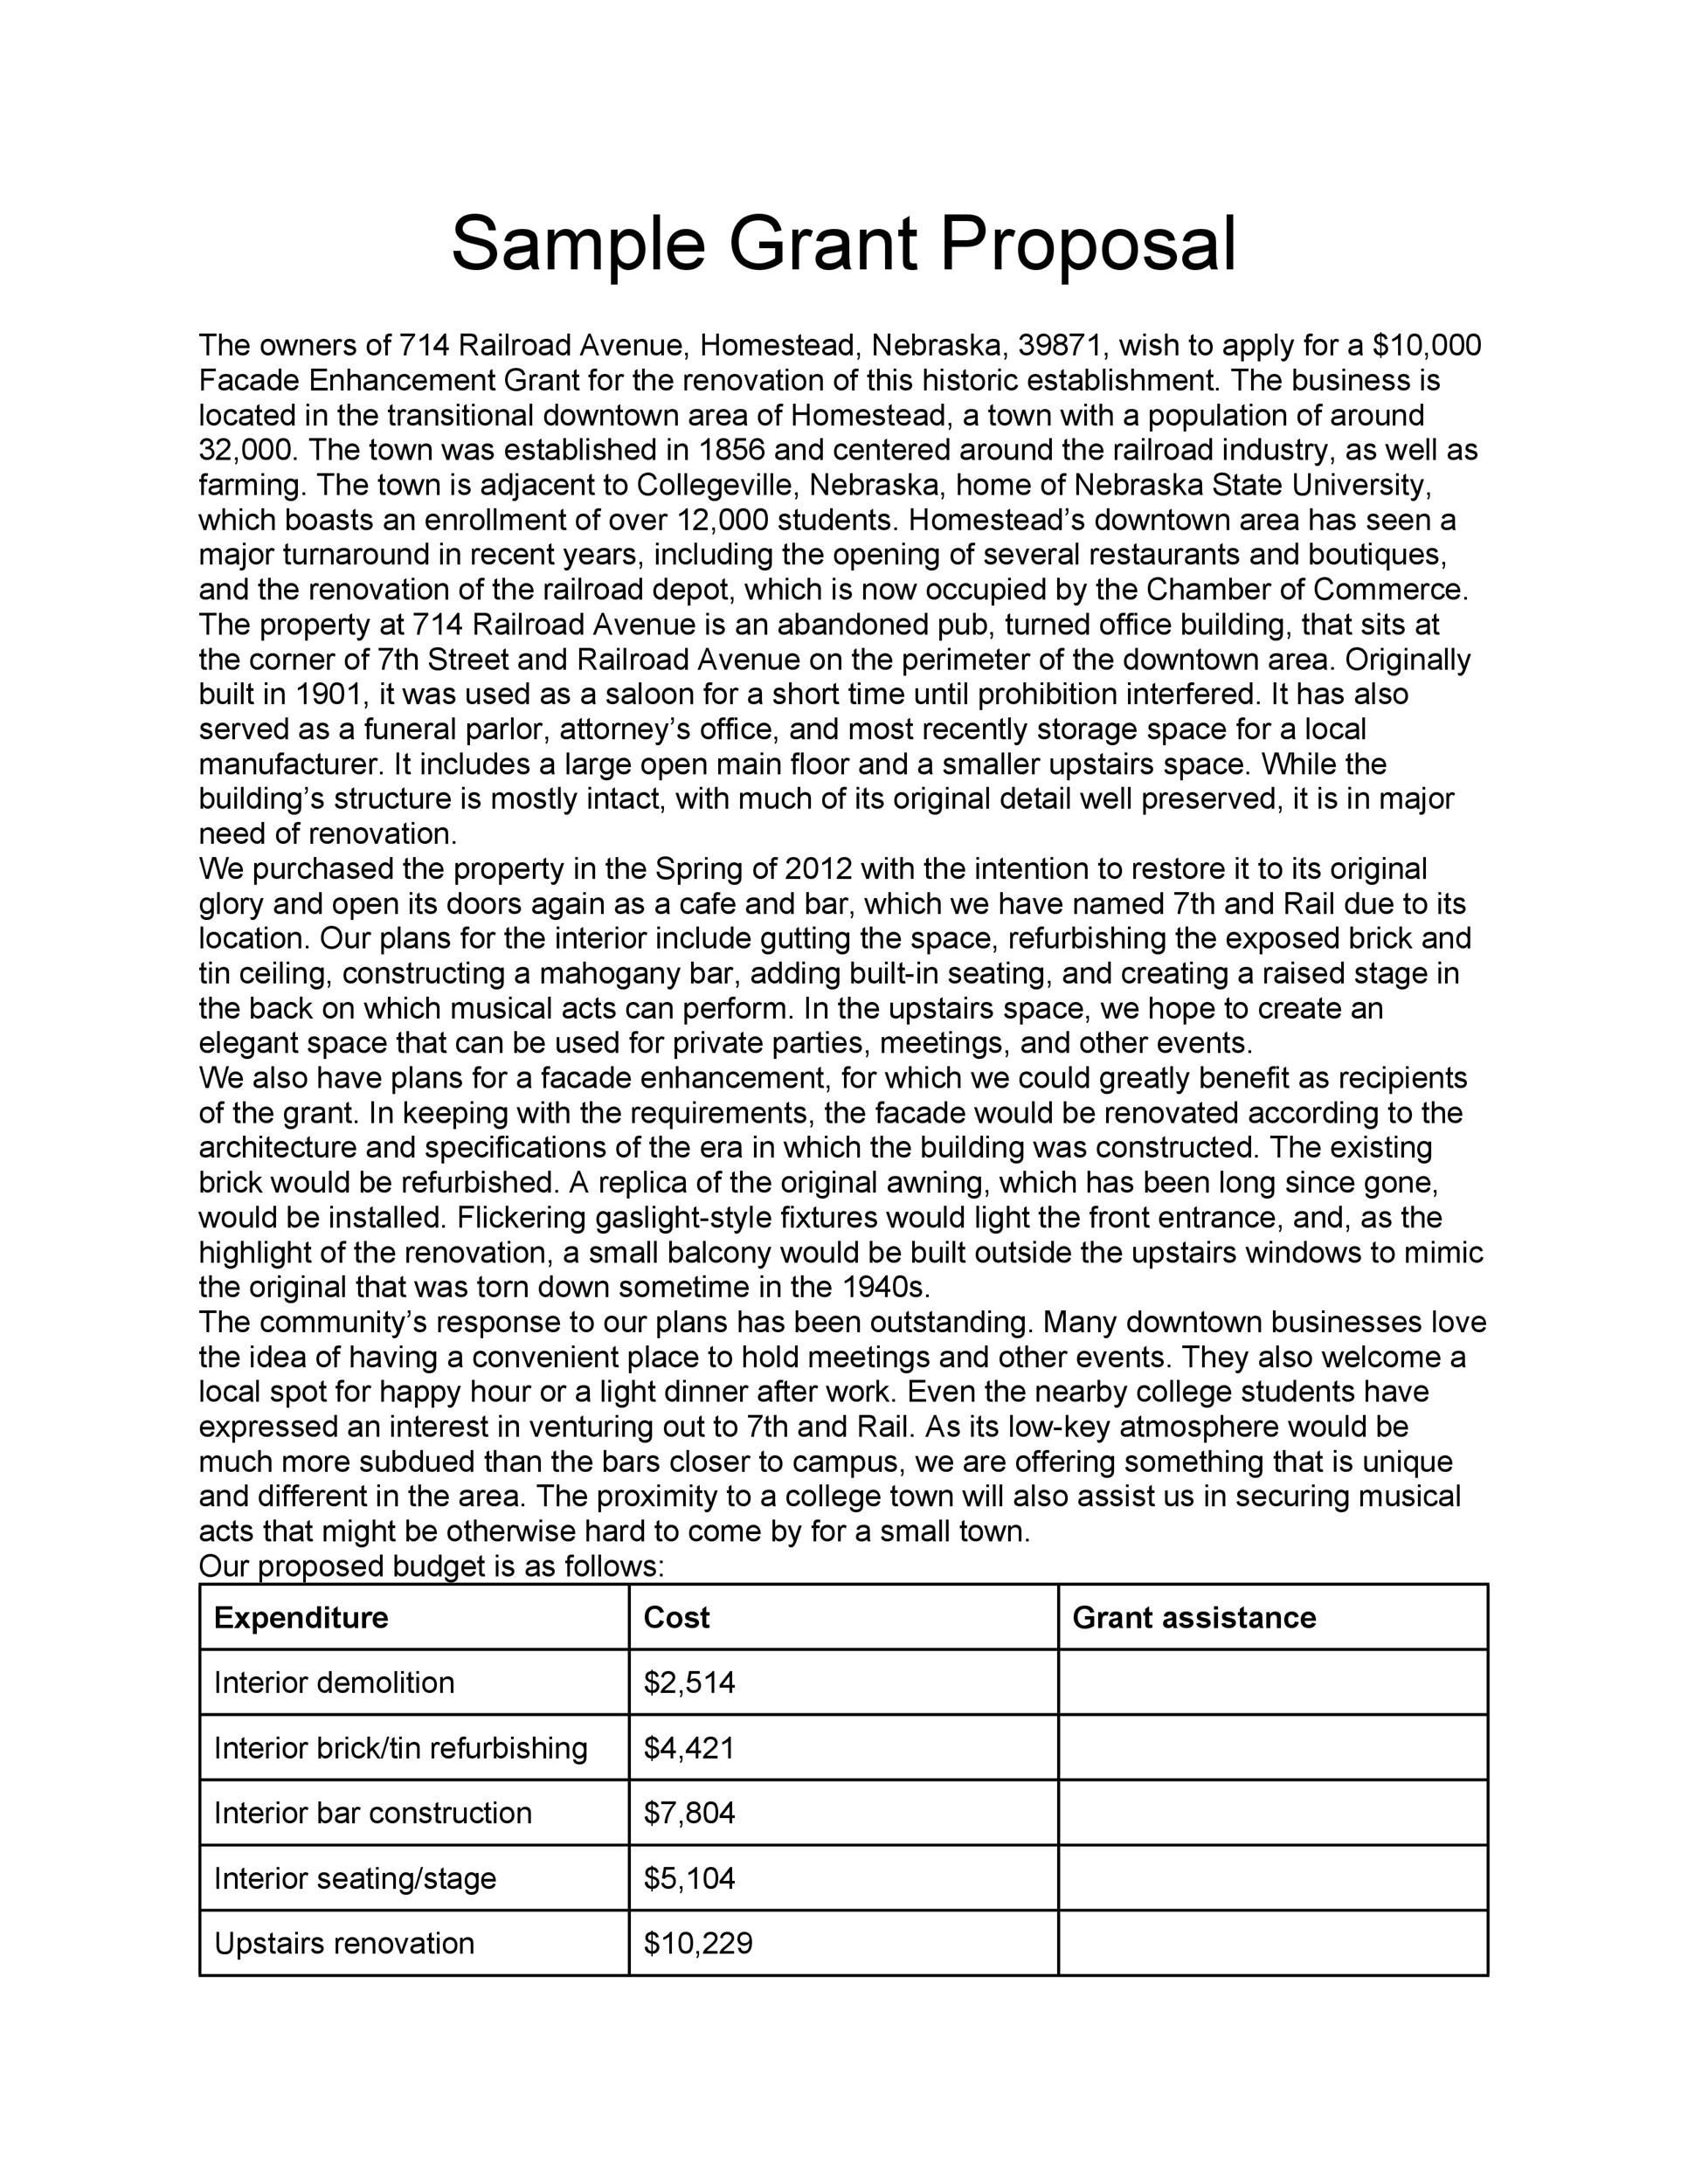 40  Grant Proposal Templates NSF Non Profit Research ᐅ TemplateLab